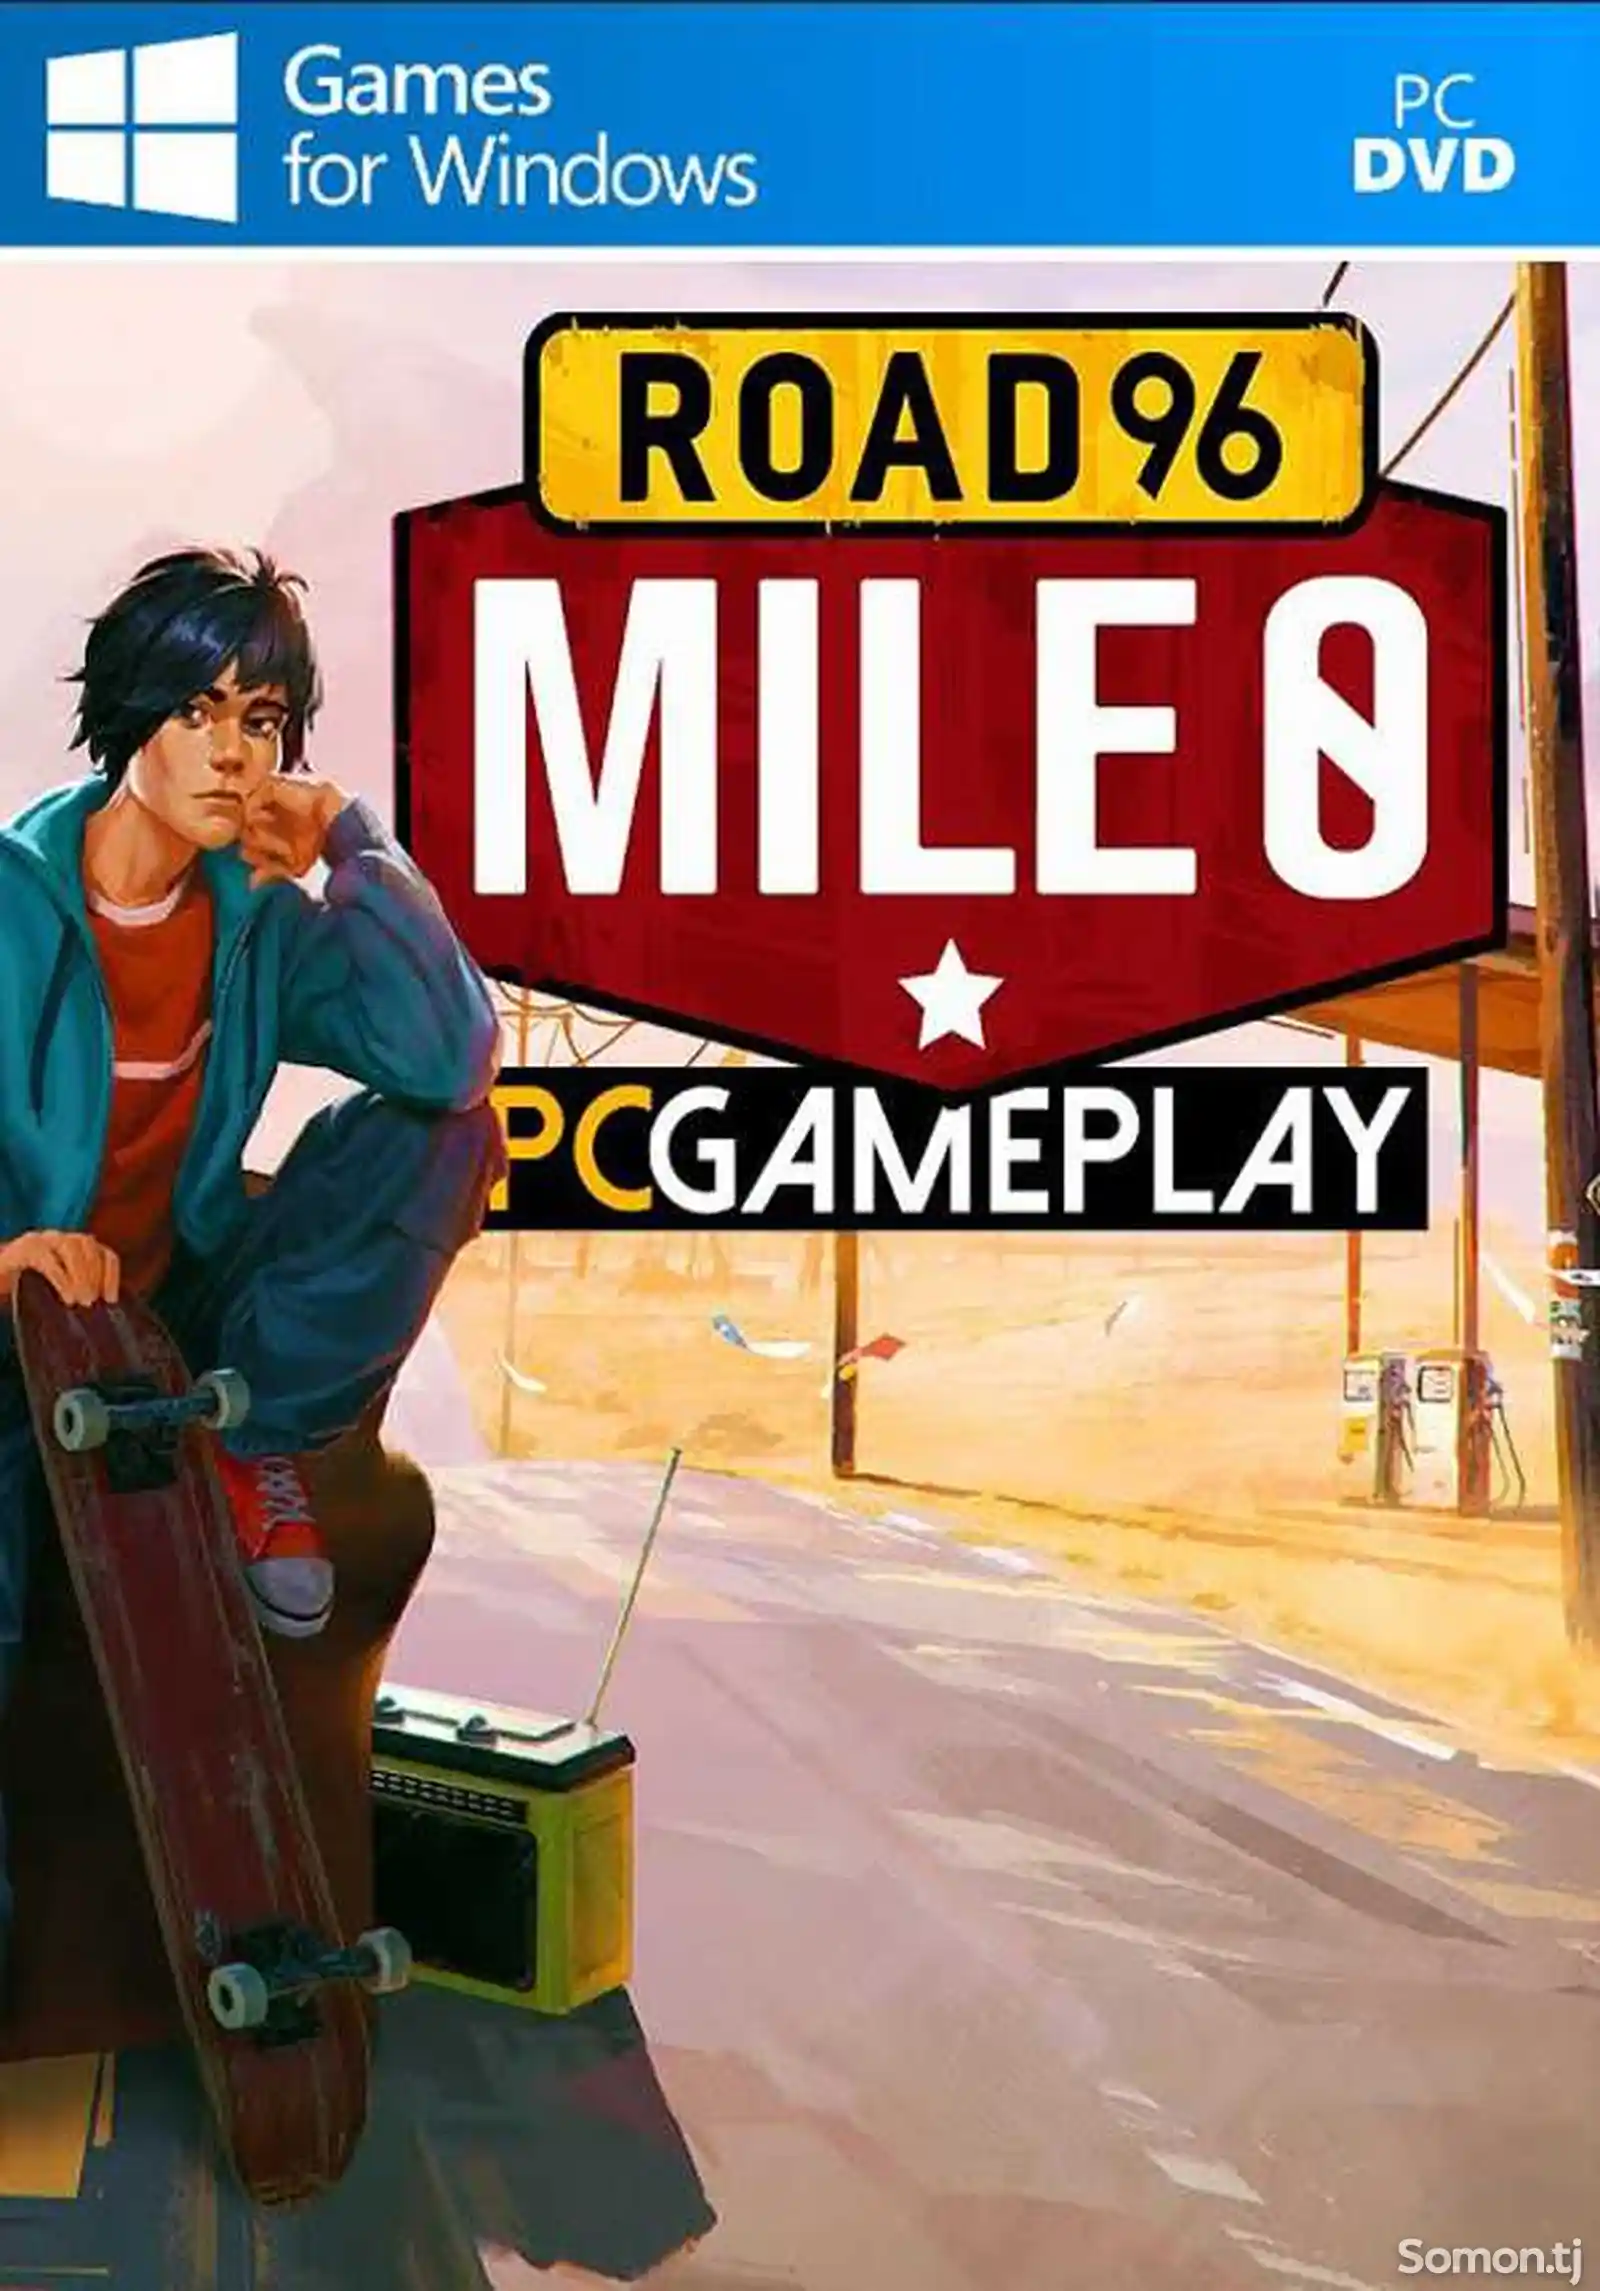 Игра Road 96 mile 0 для компьютера-пк-pc-1